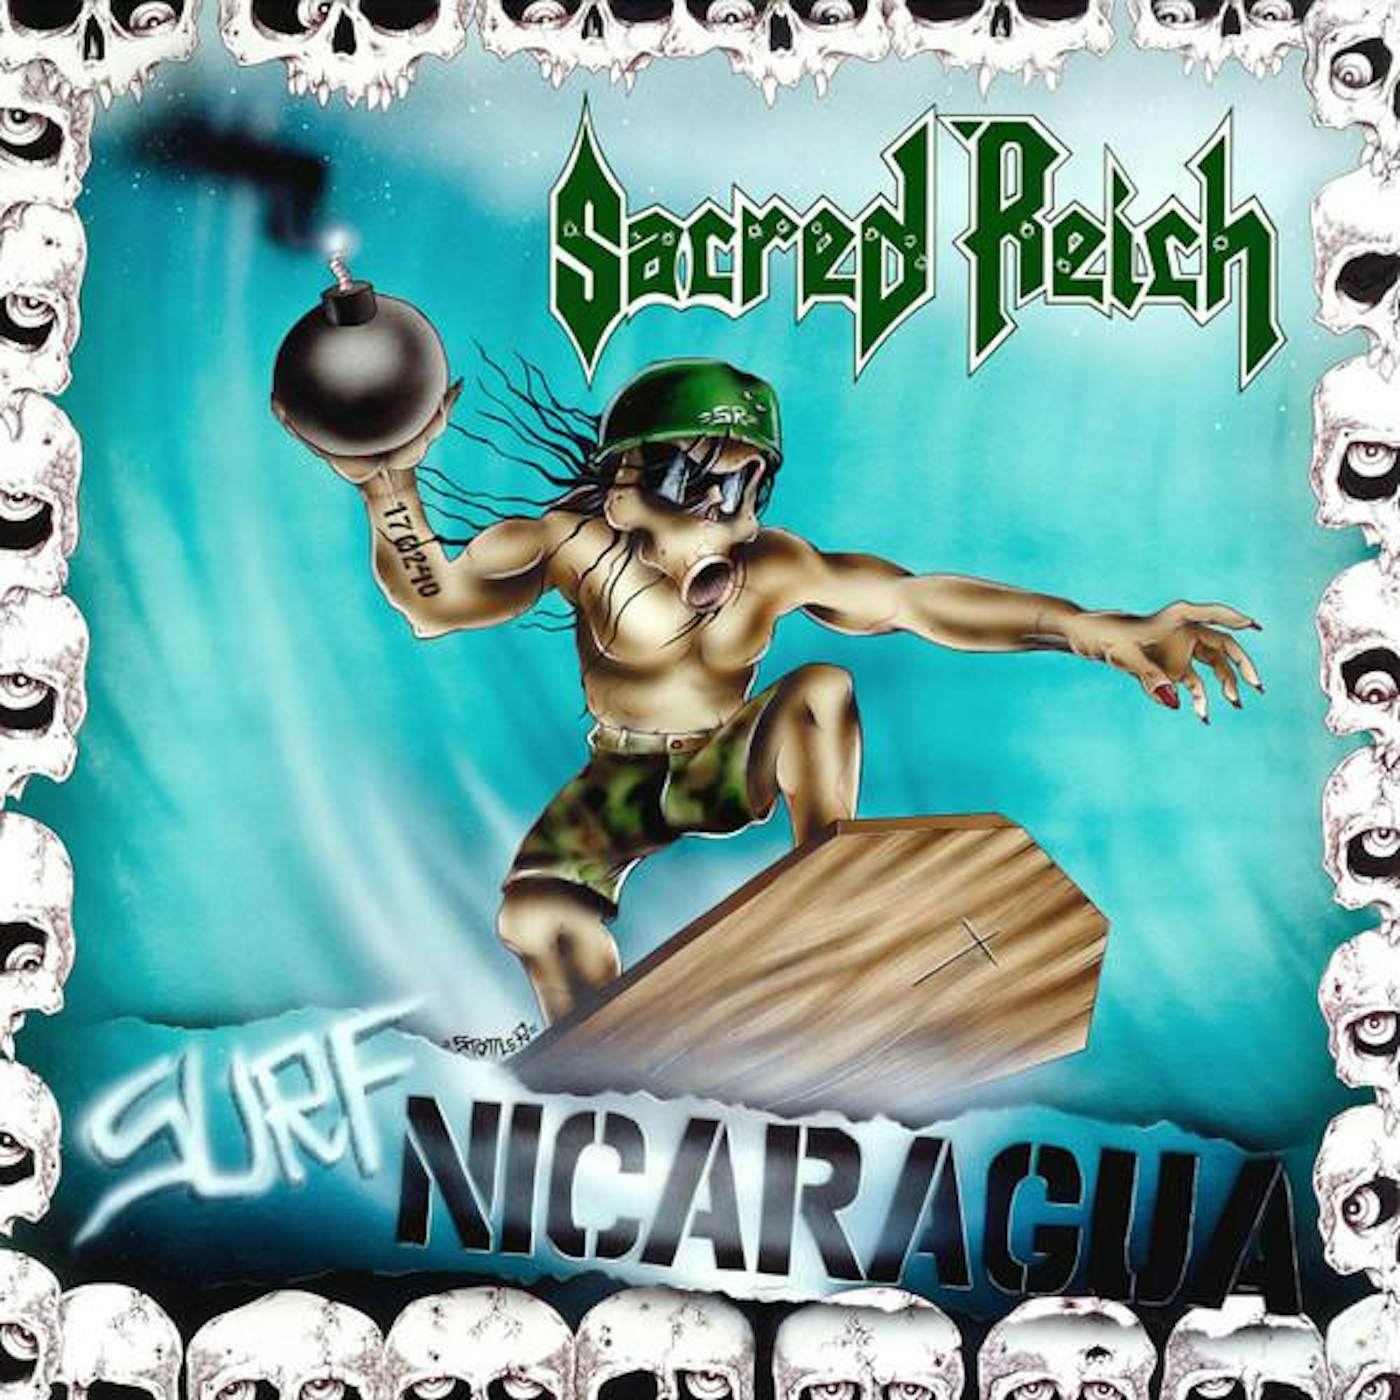 Sacred Reich SURF NICARAGUA CD